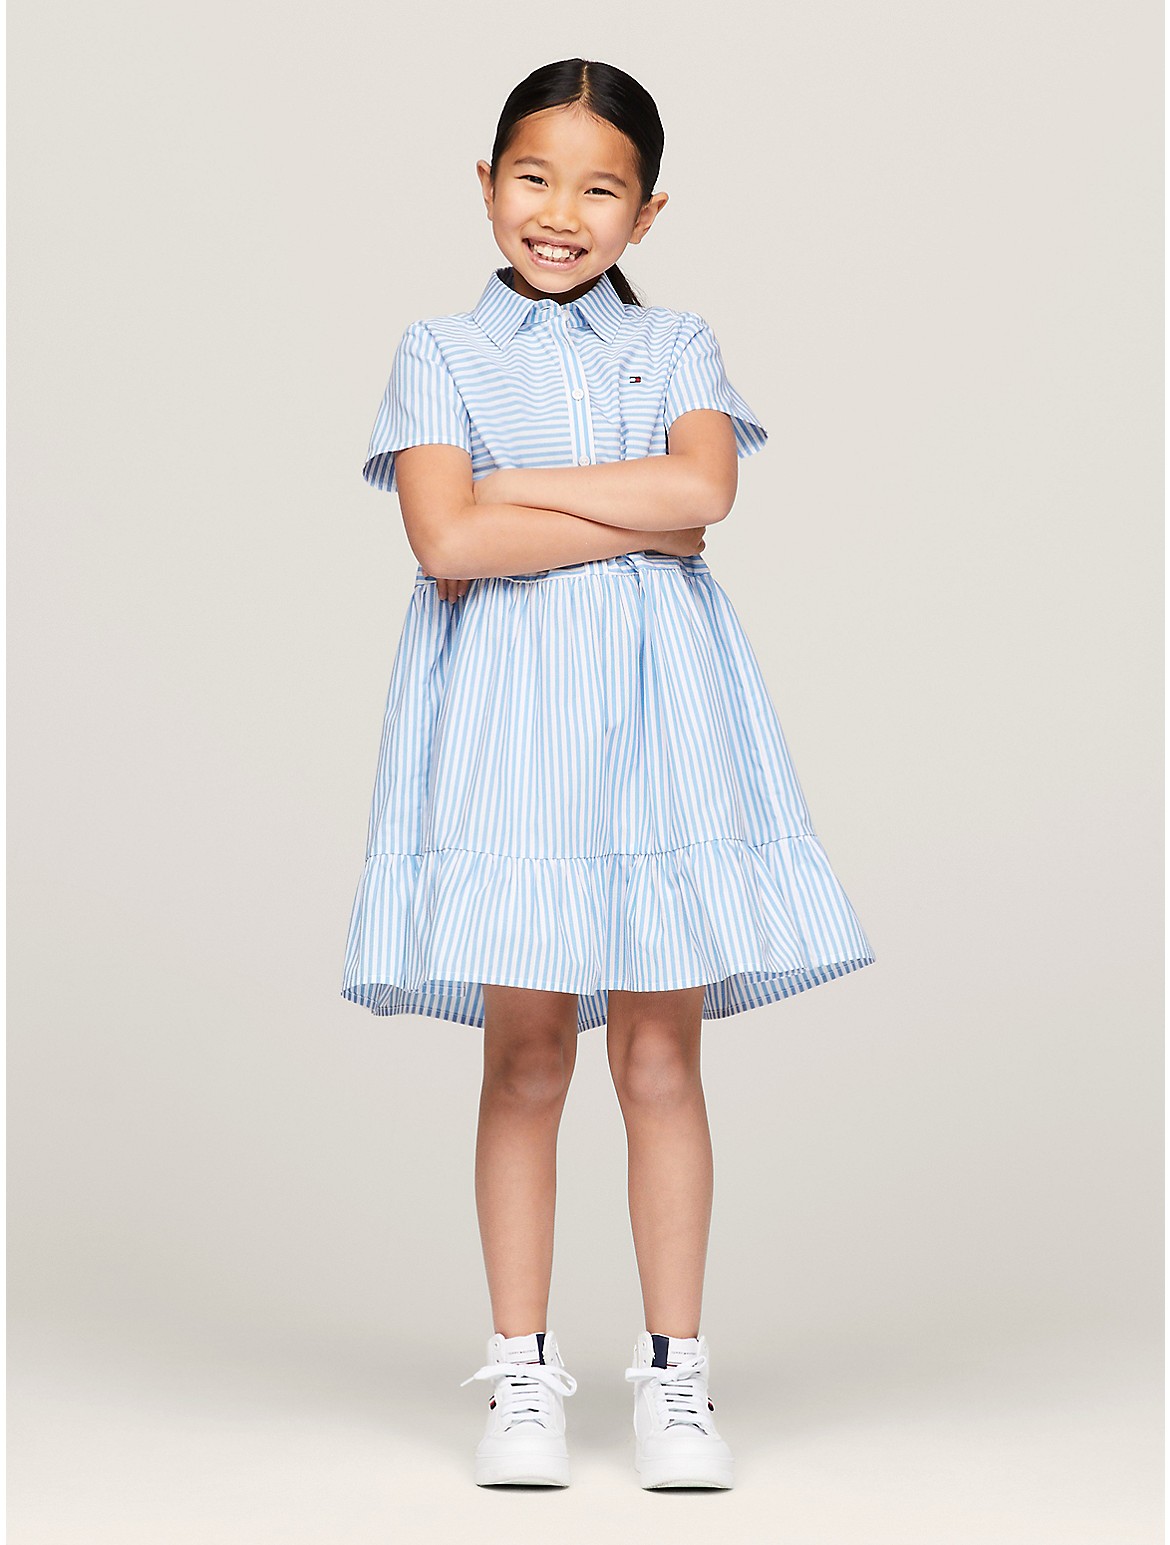 Tommy Hilfiger Girls' Kids' Stripe Dress and Scrunchie Set